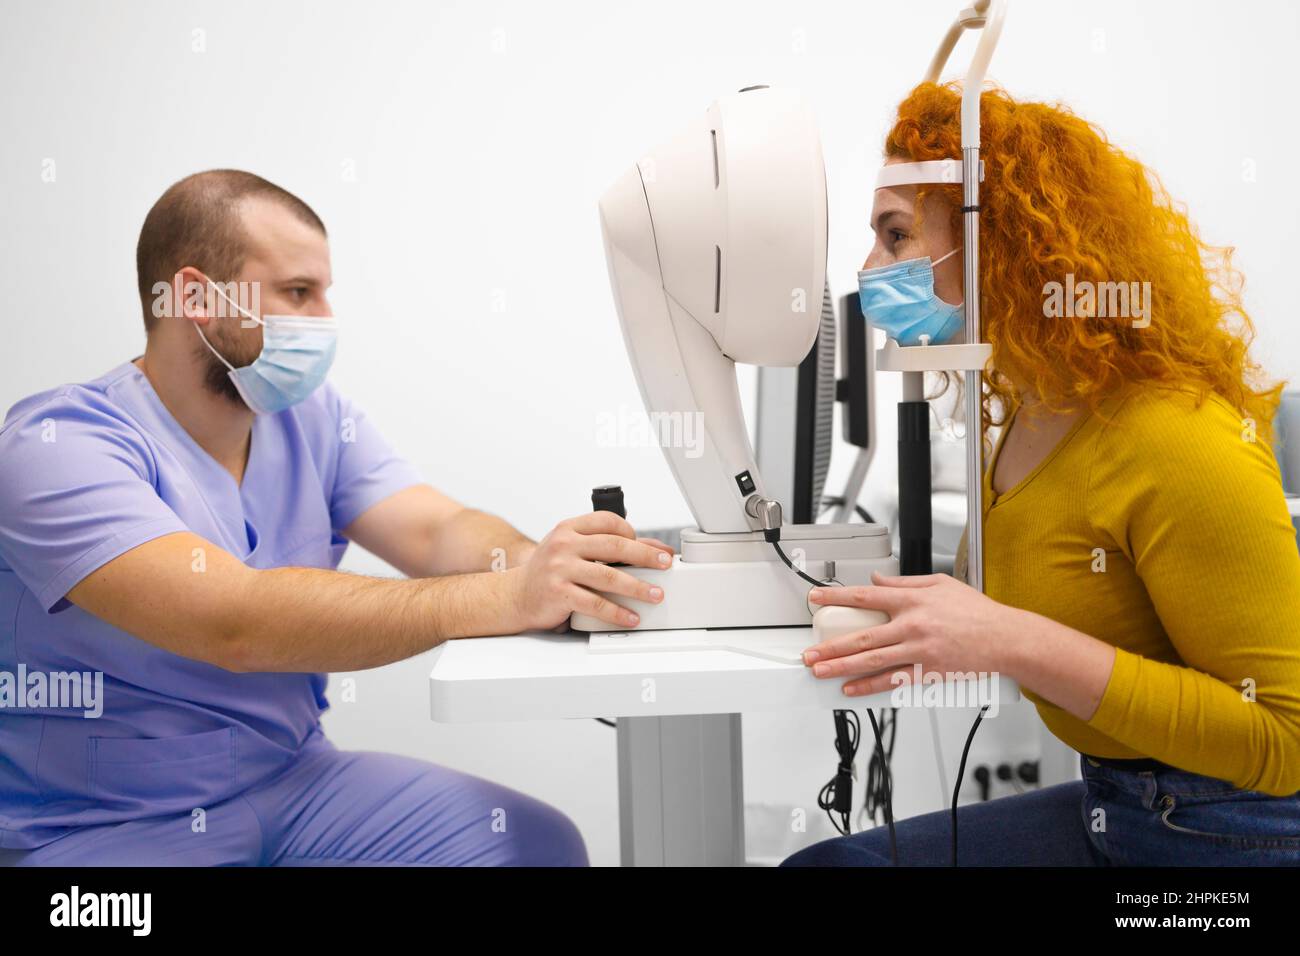 A technician and a customer during a regular eye exam Stock Photo